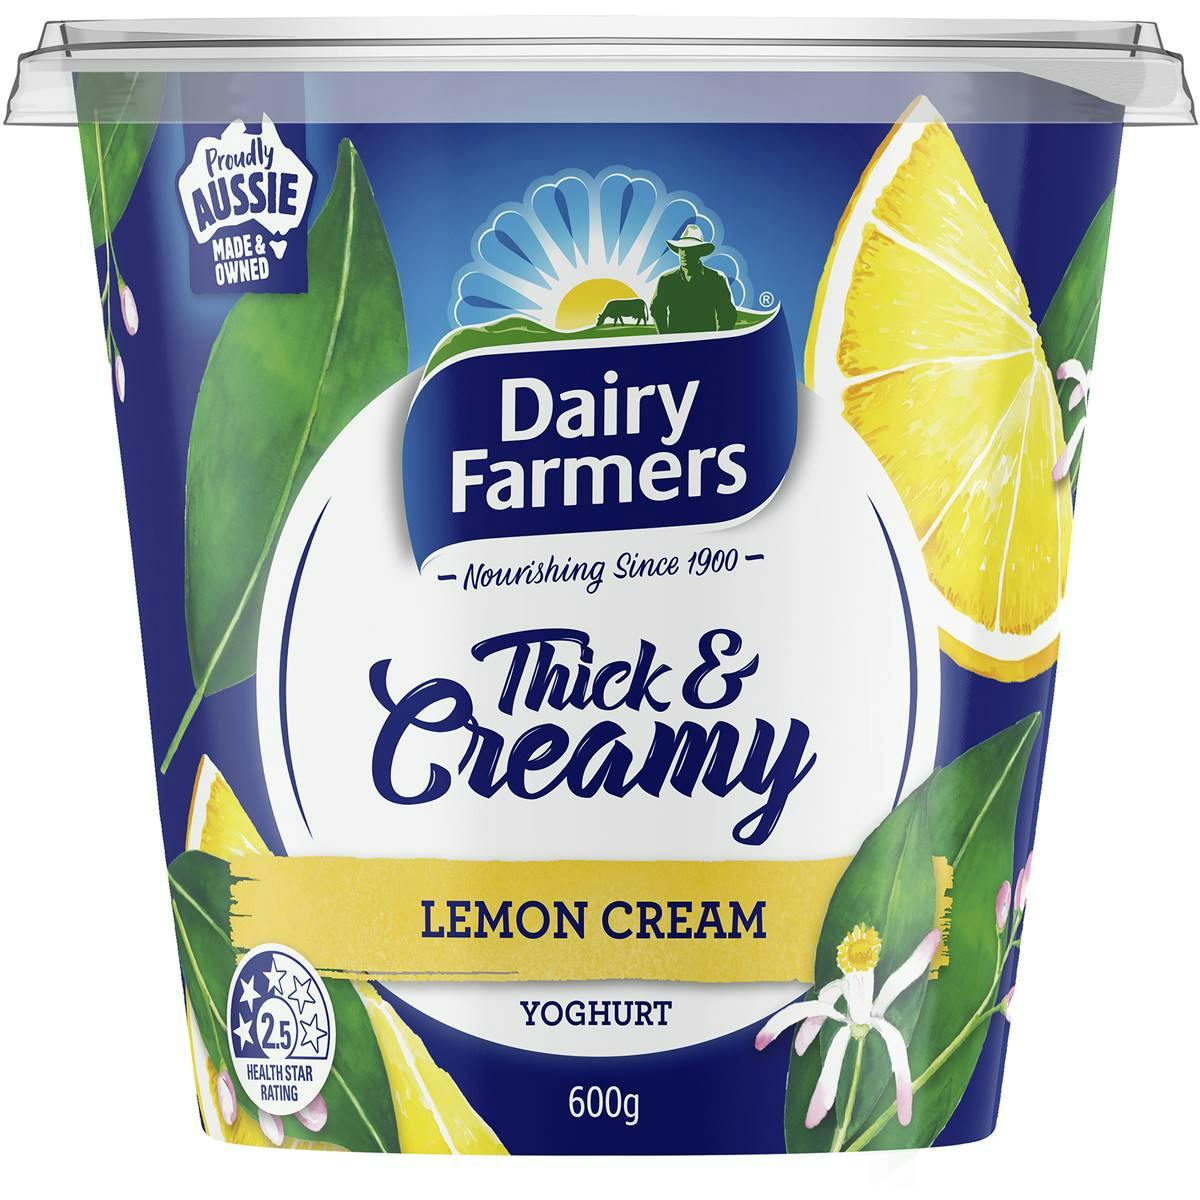 Dairy Farmers Thick & Creamy Yoghurt Lemon Cream